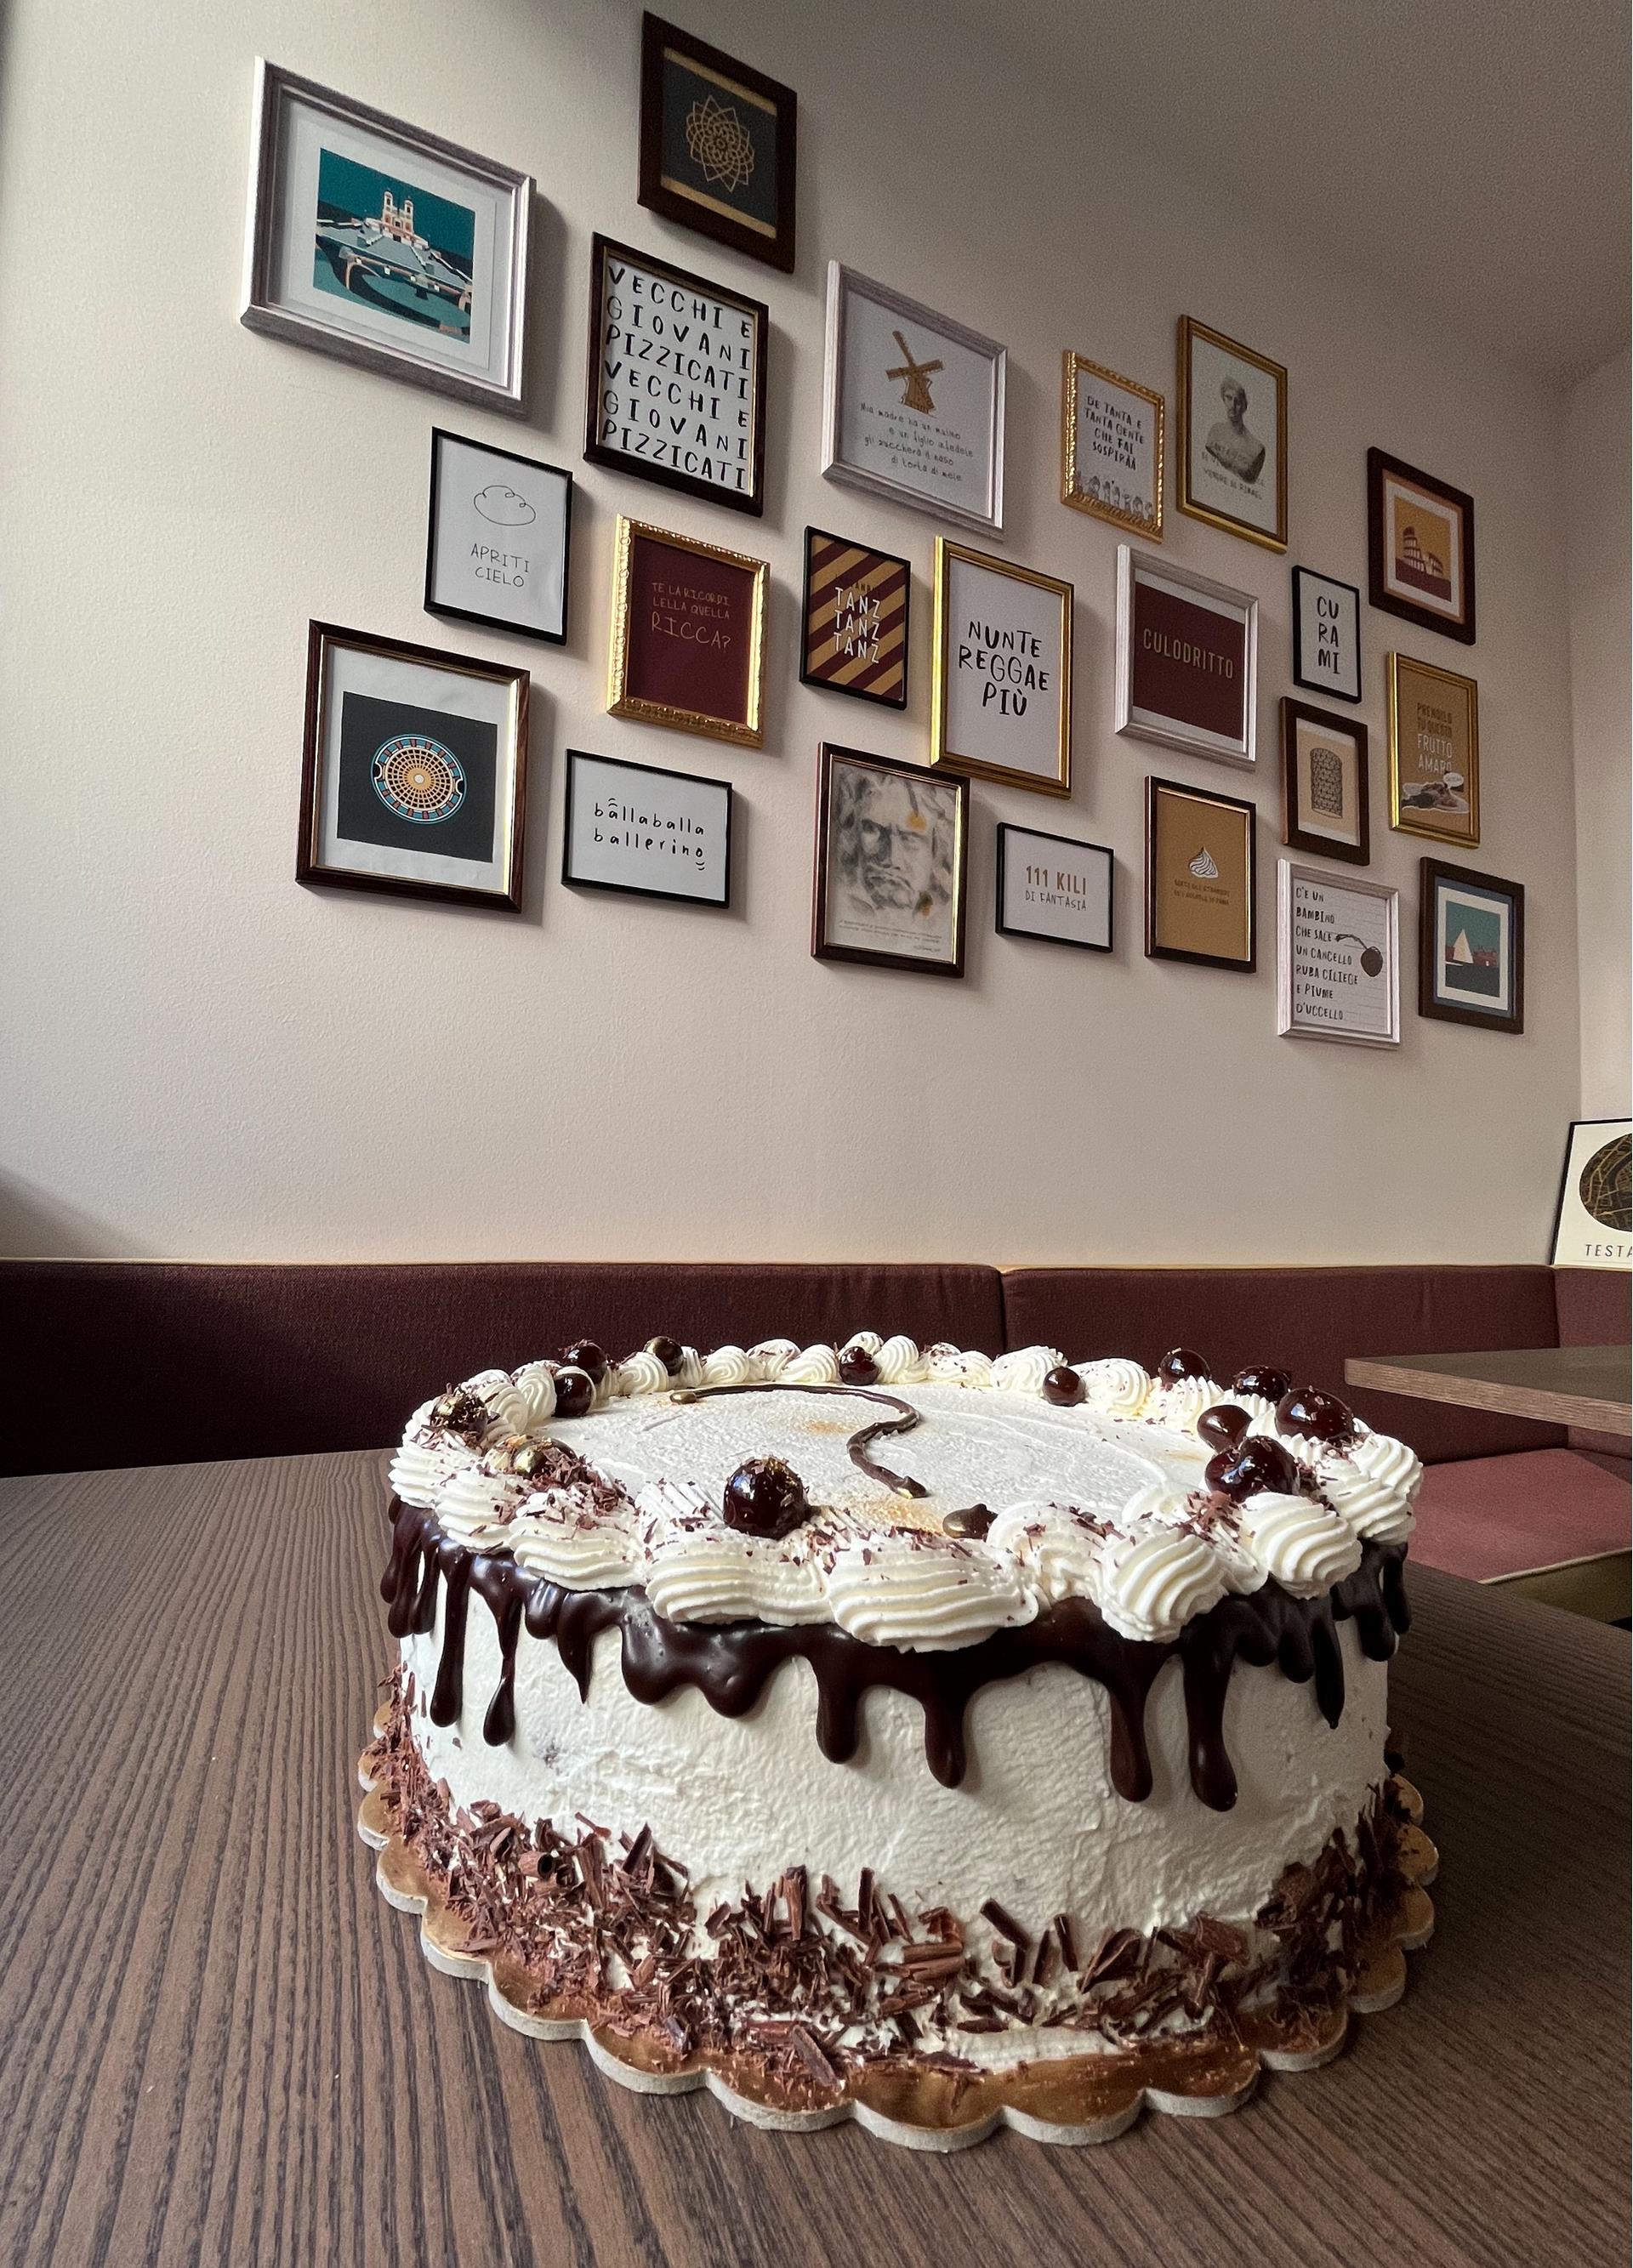 Edvige_dessert_torta